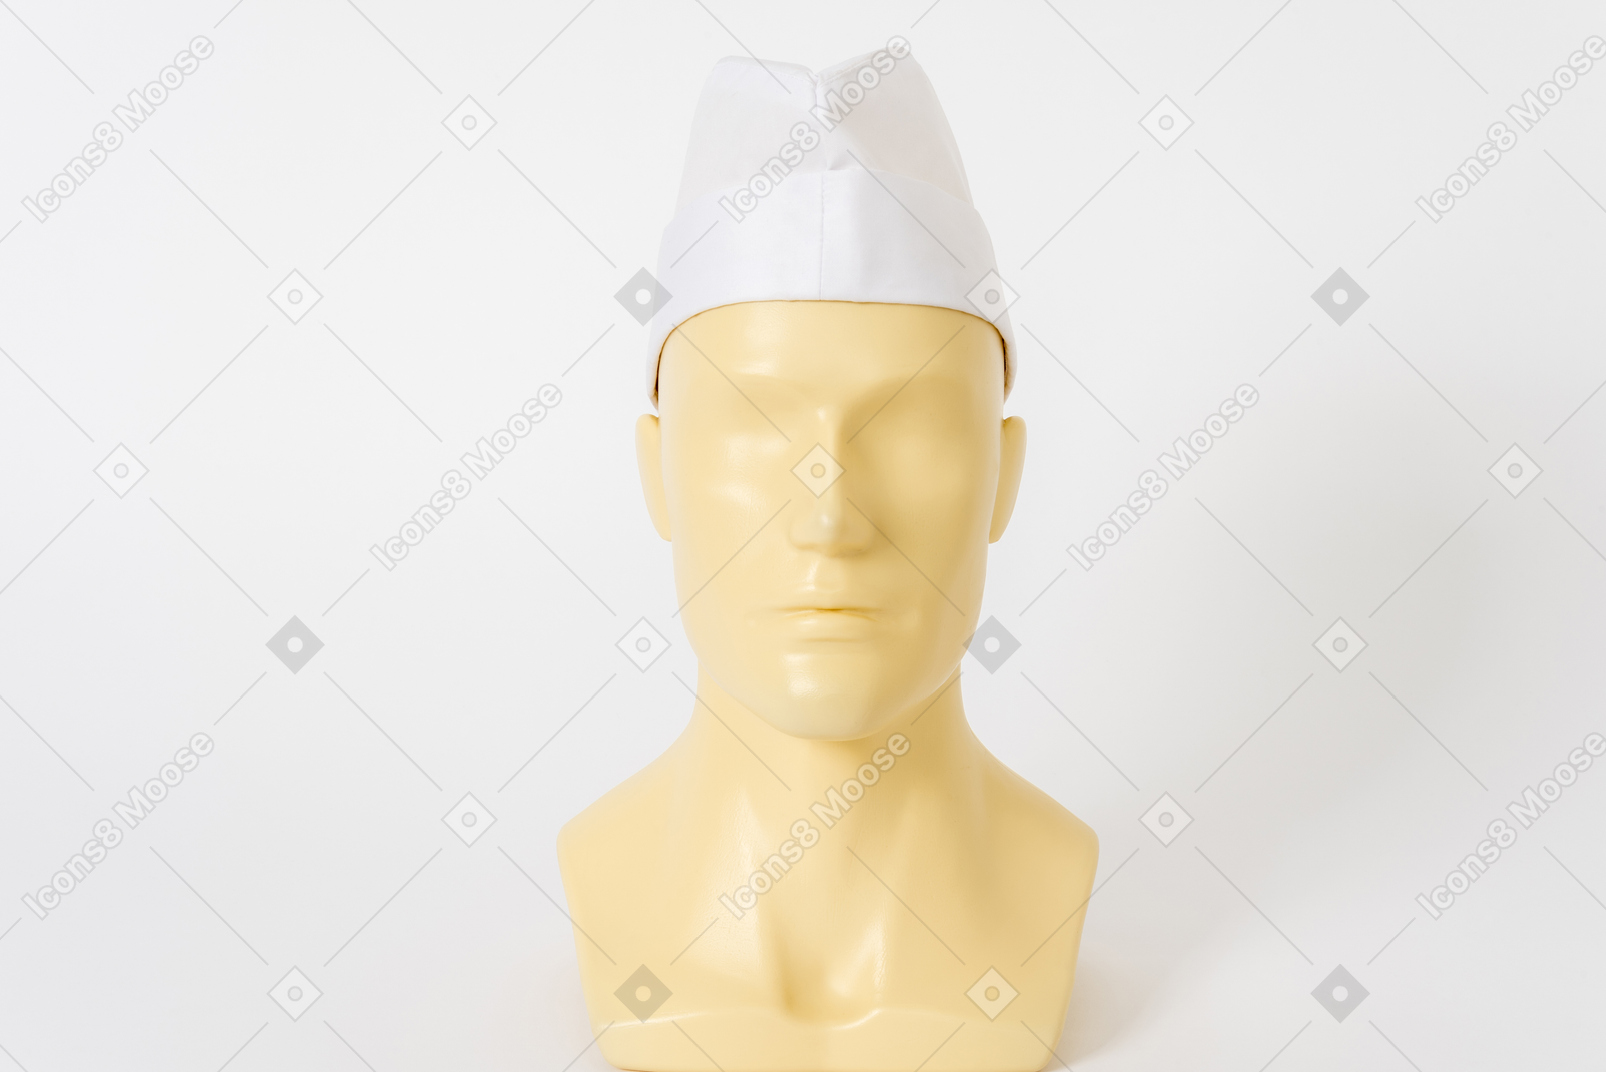 Medical hat on mannequin head